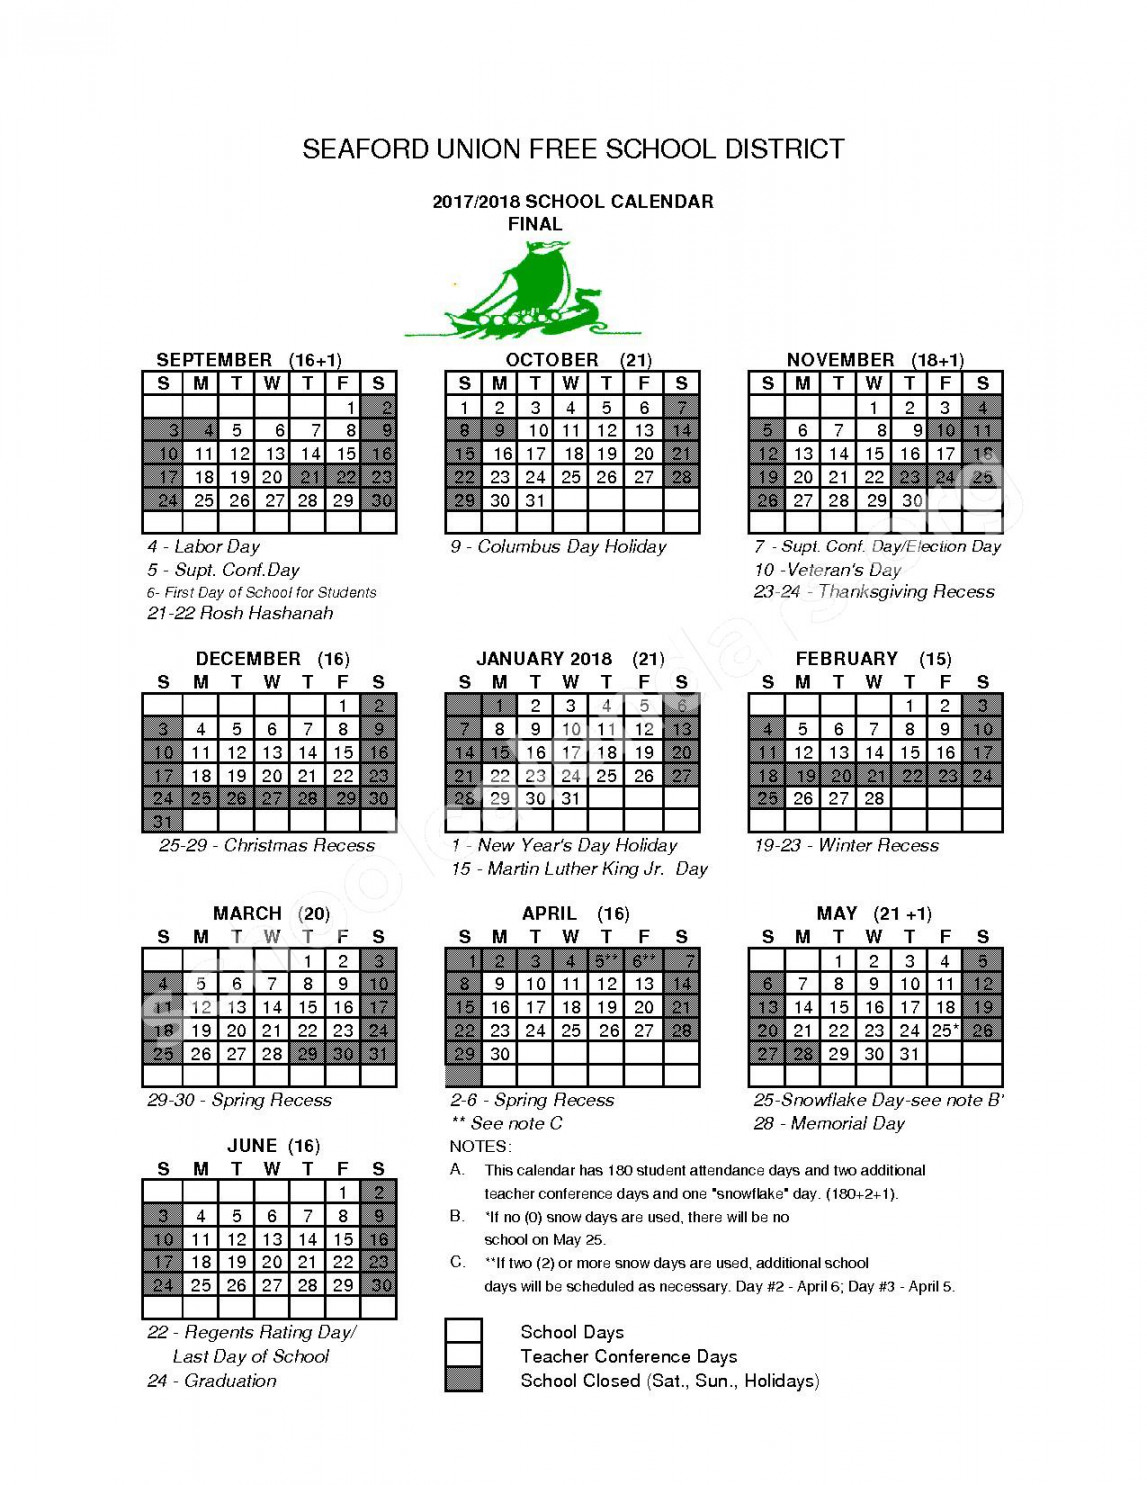 Seaford Union Free School District Calendars – Seaford, NY